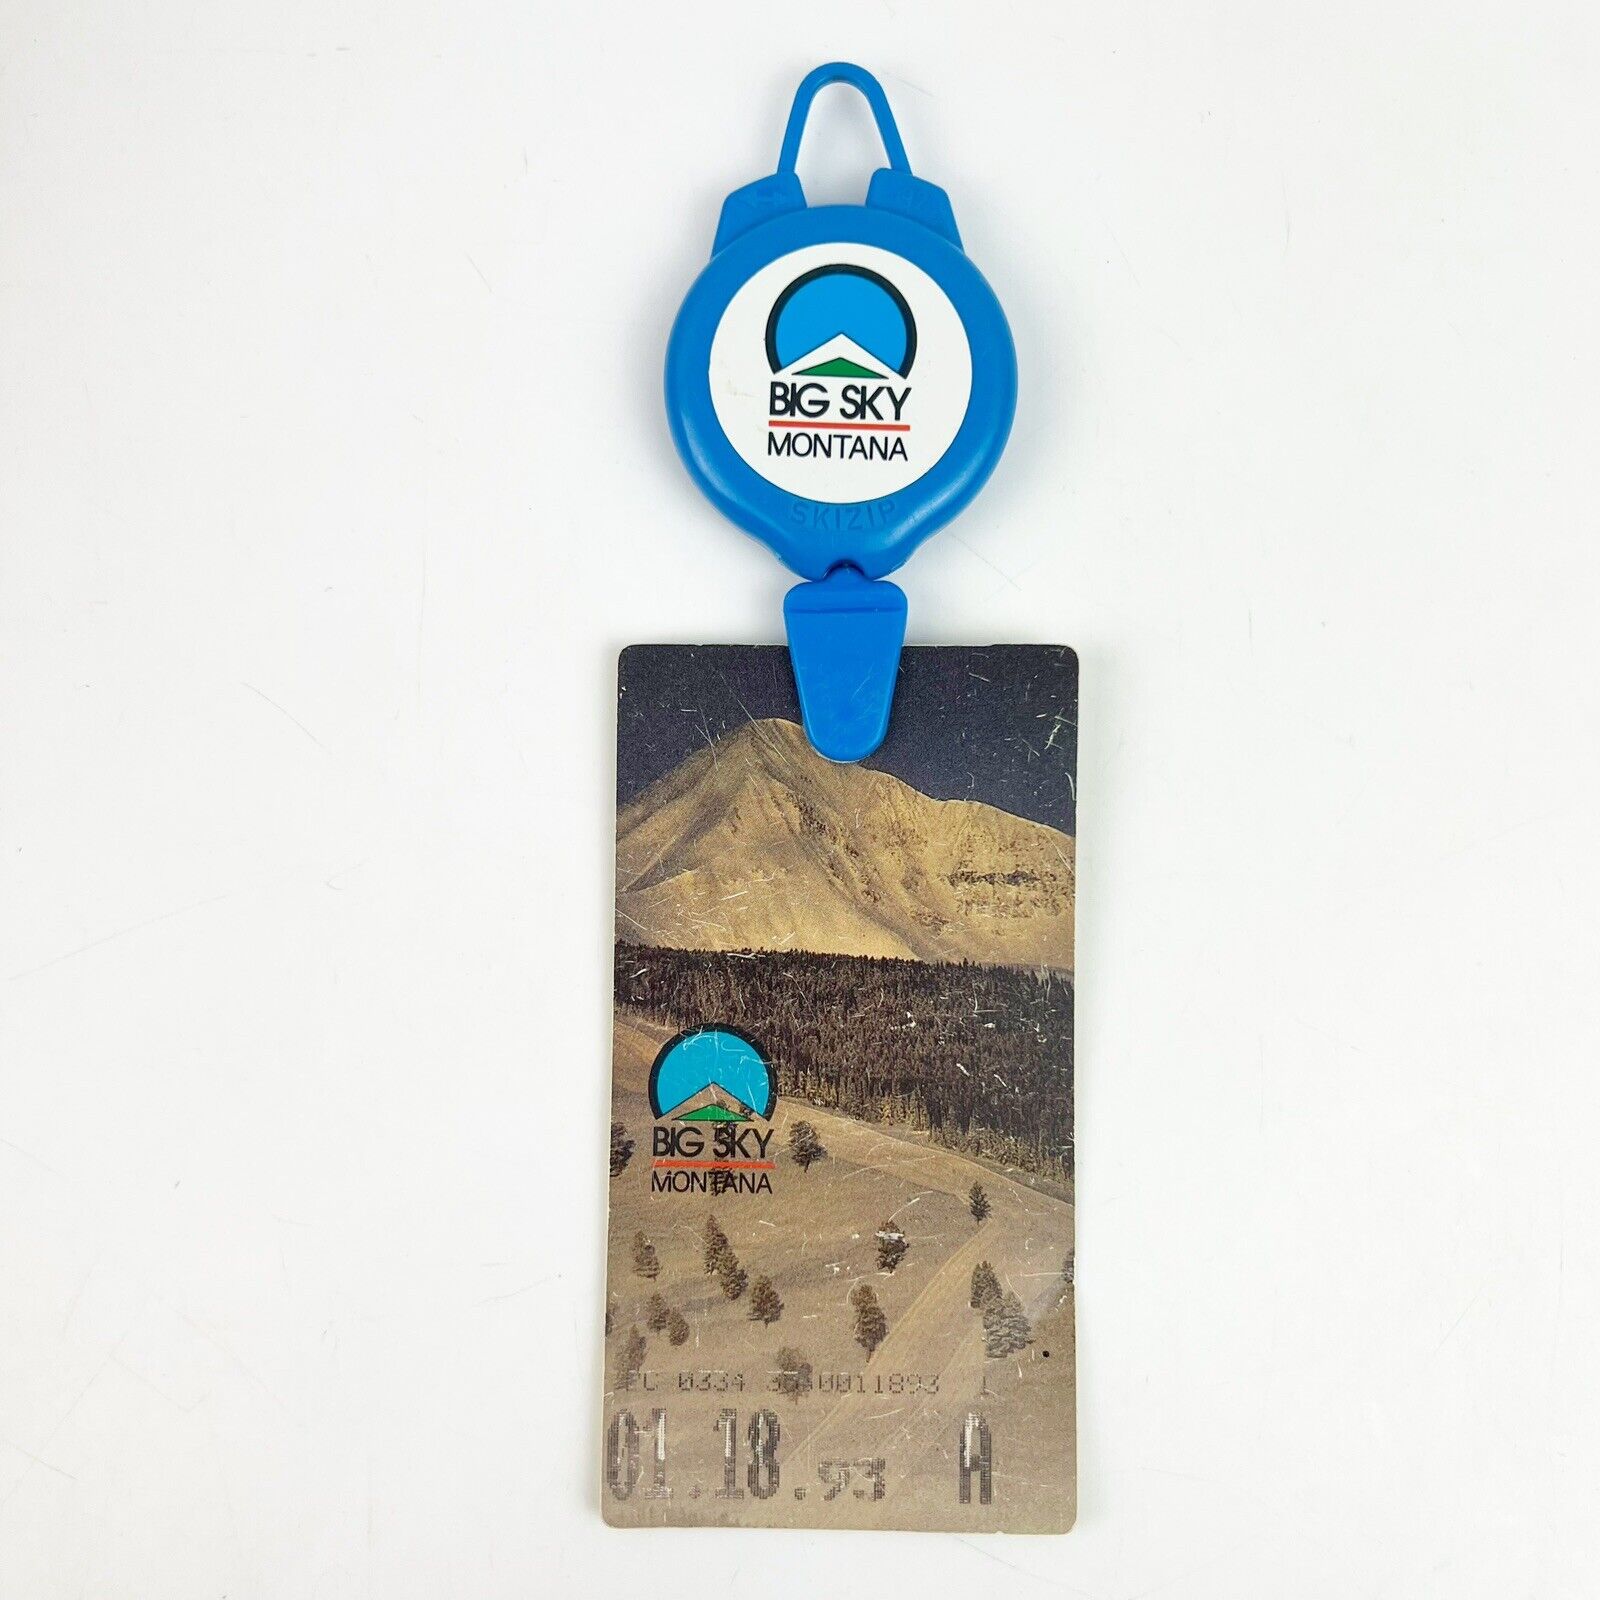 Vtg 1993 Big Sky Montana Vintage Ski Lift Ticket + Pull String Holder Souvenir